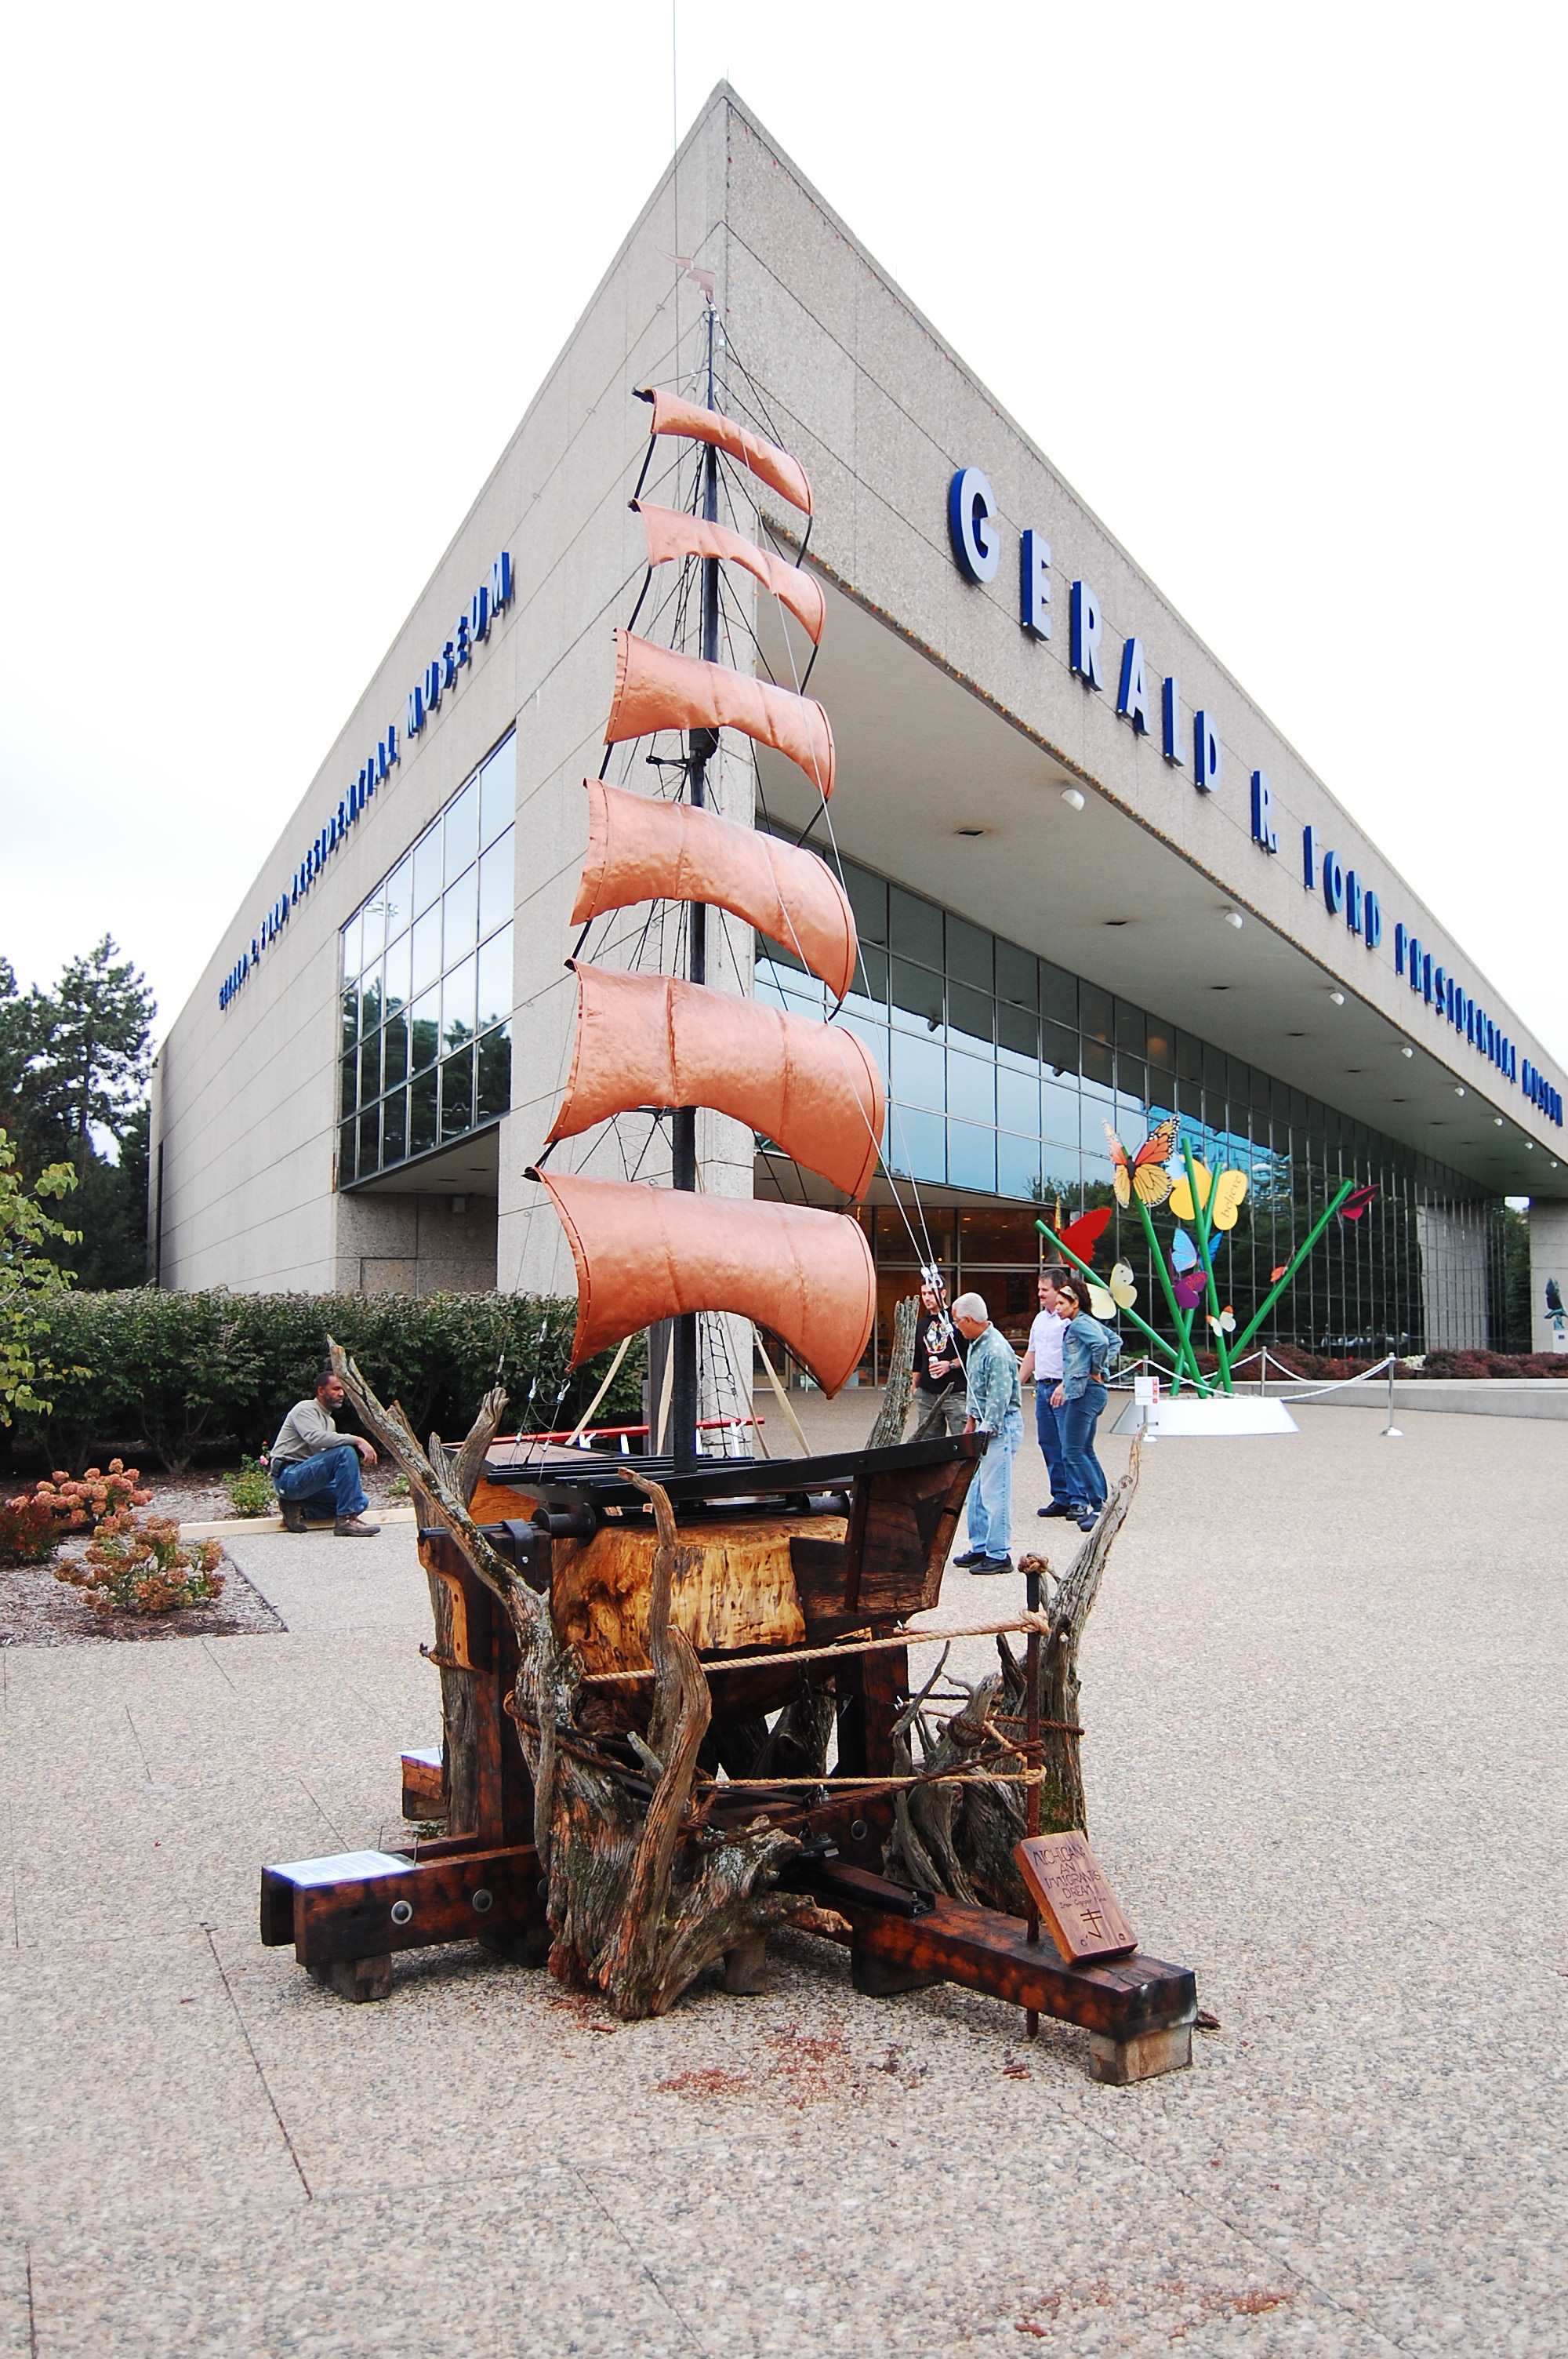 Iron John Ship on display